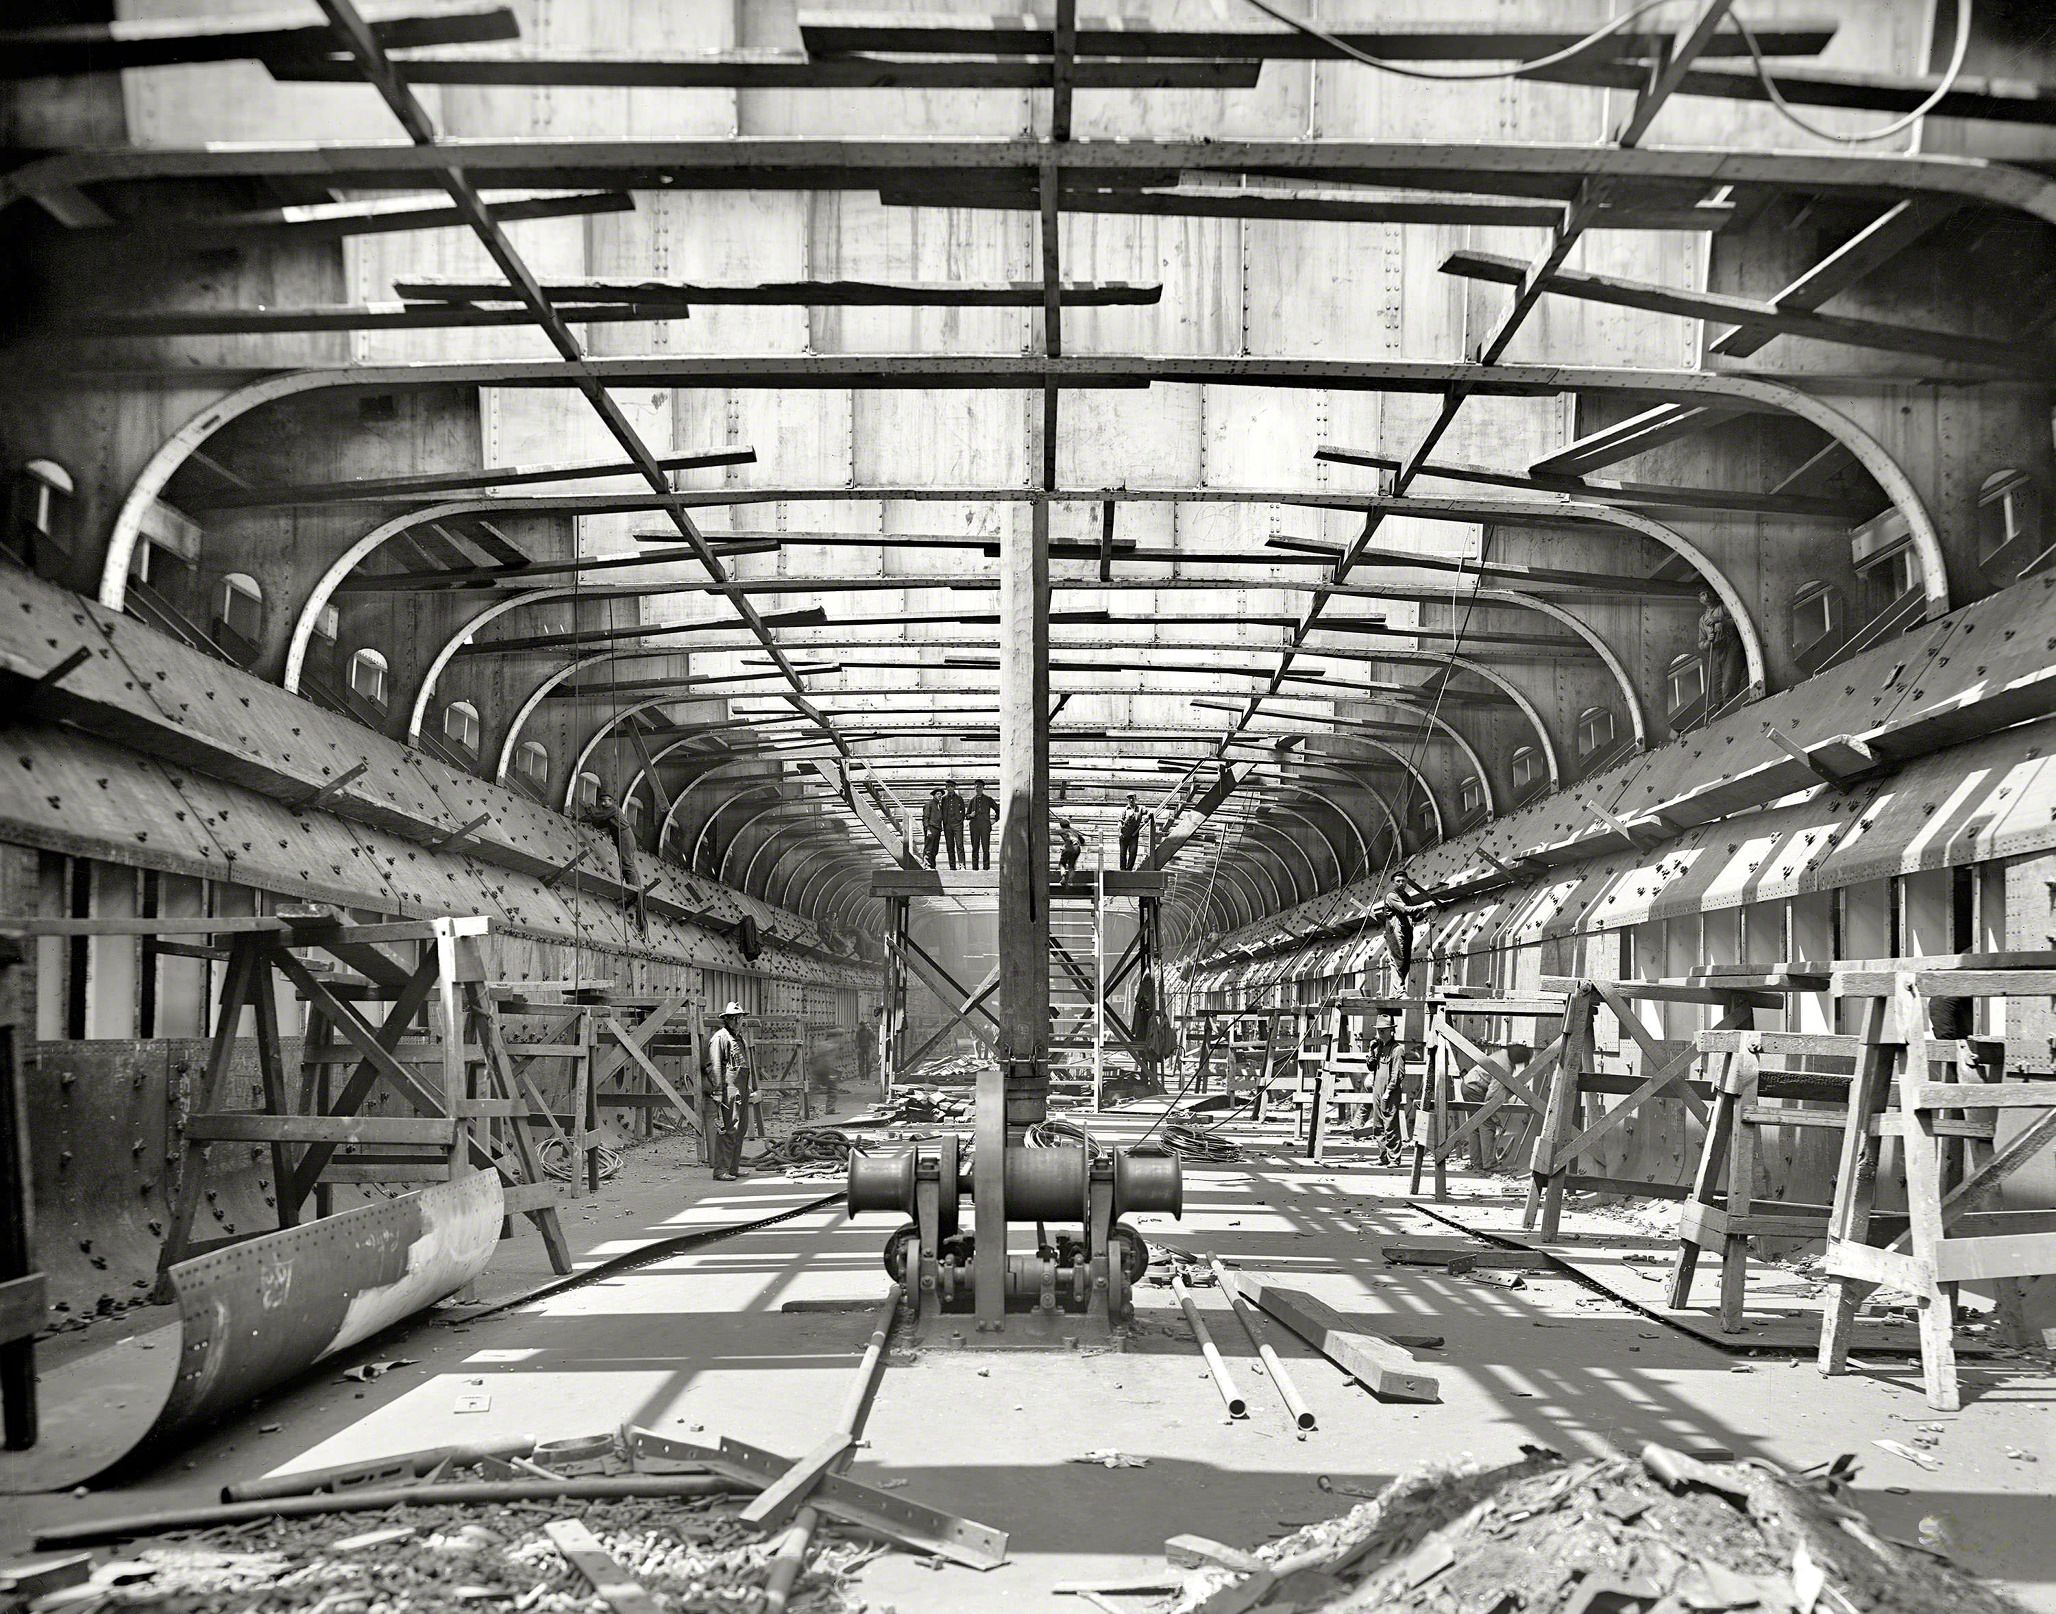 Steamer William E. Corey, interior of hold, South Chicago circa 1905